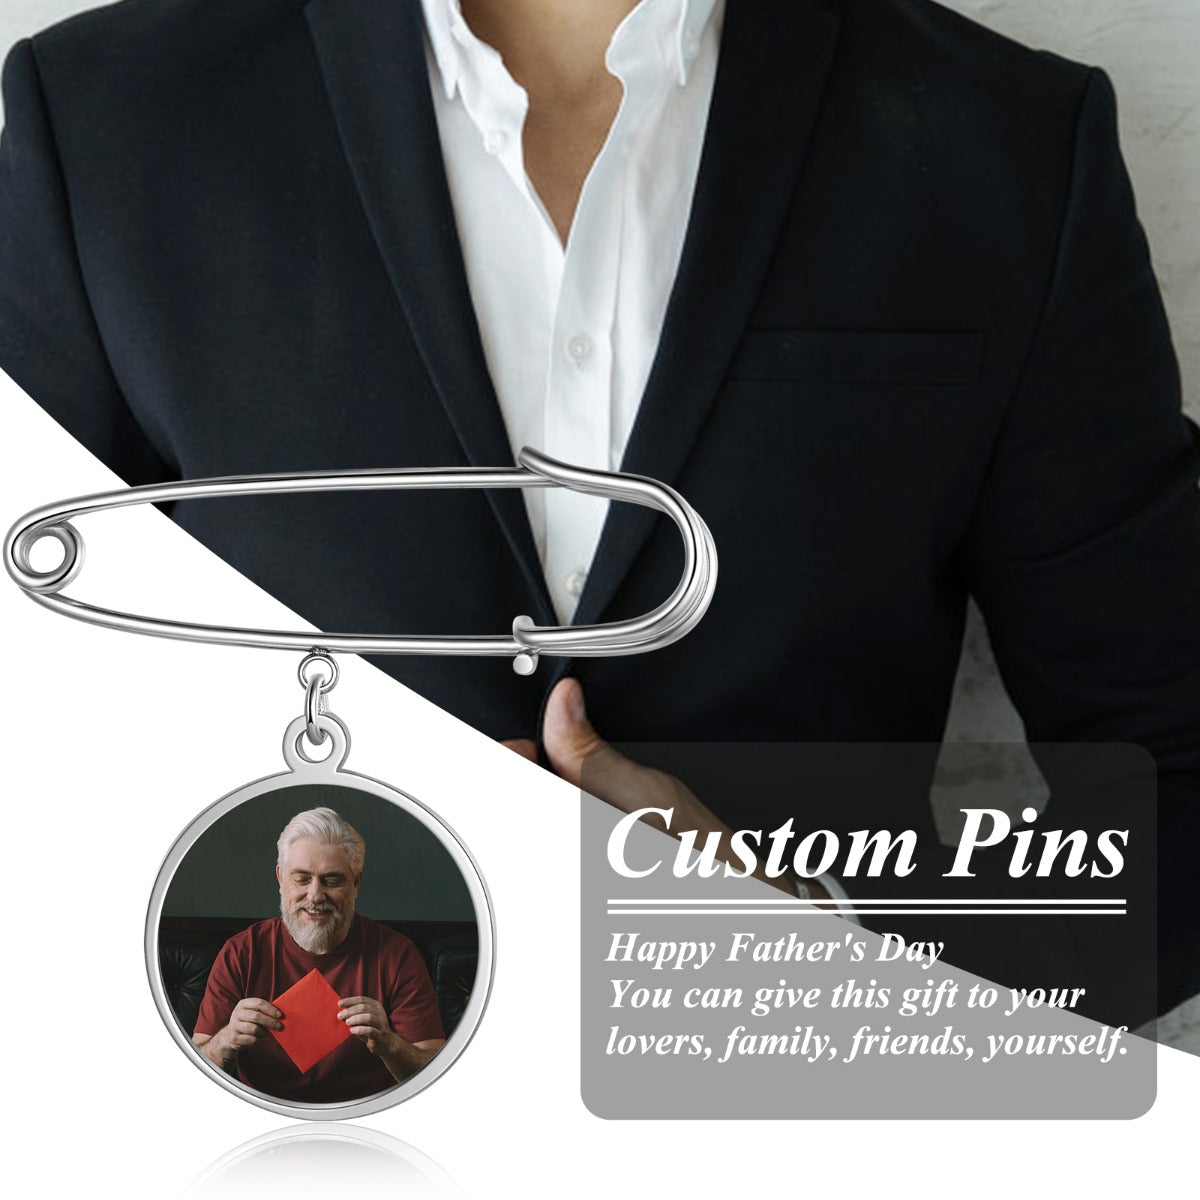 Personalized Rhodium Plated Custom Photo Pins